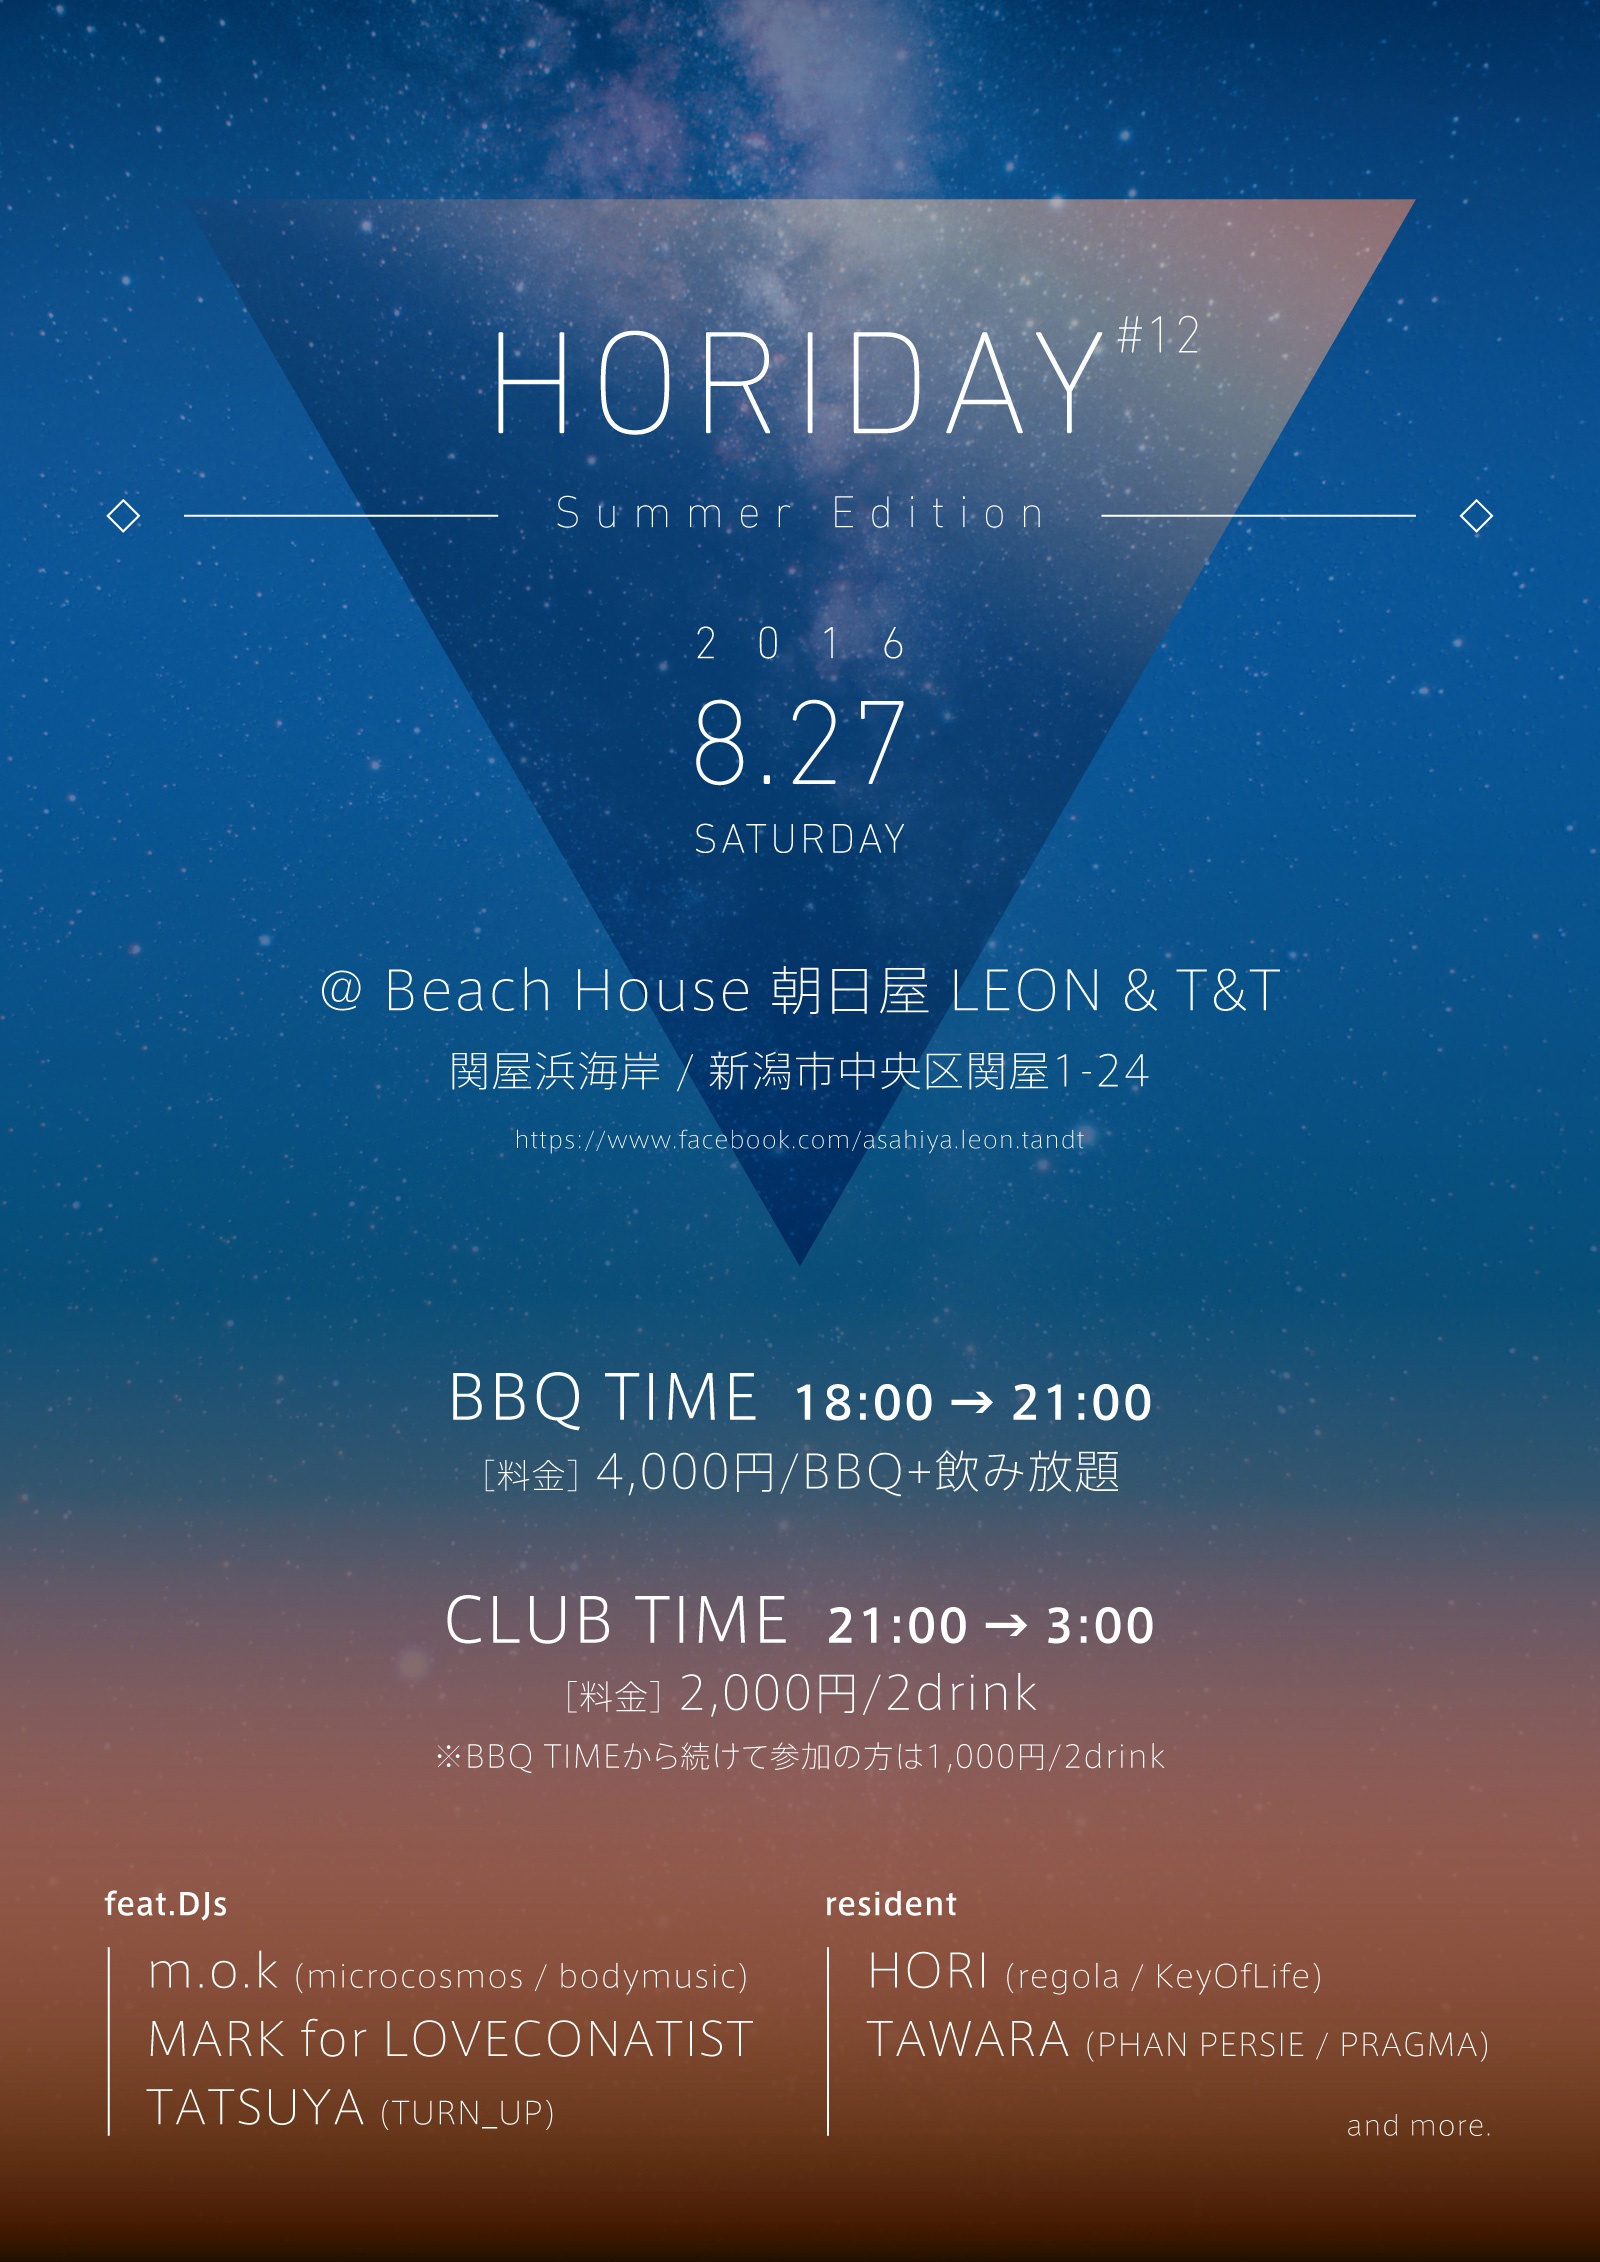 2016.8.27 SAT – TAWARA : DJ@Beach House 朝日屋 LEON & T&T(関屋浜海岸) / HORIDAY #12 〜Summer Edition〜